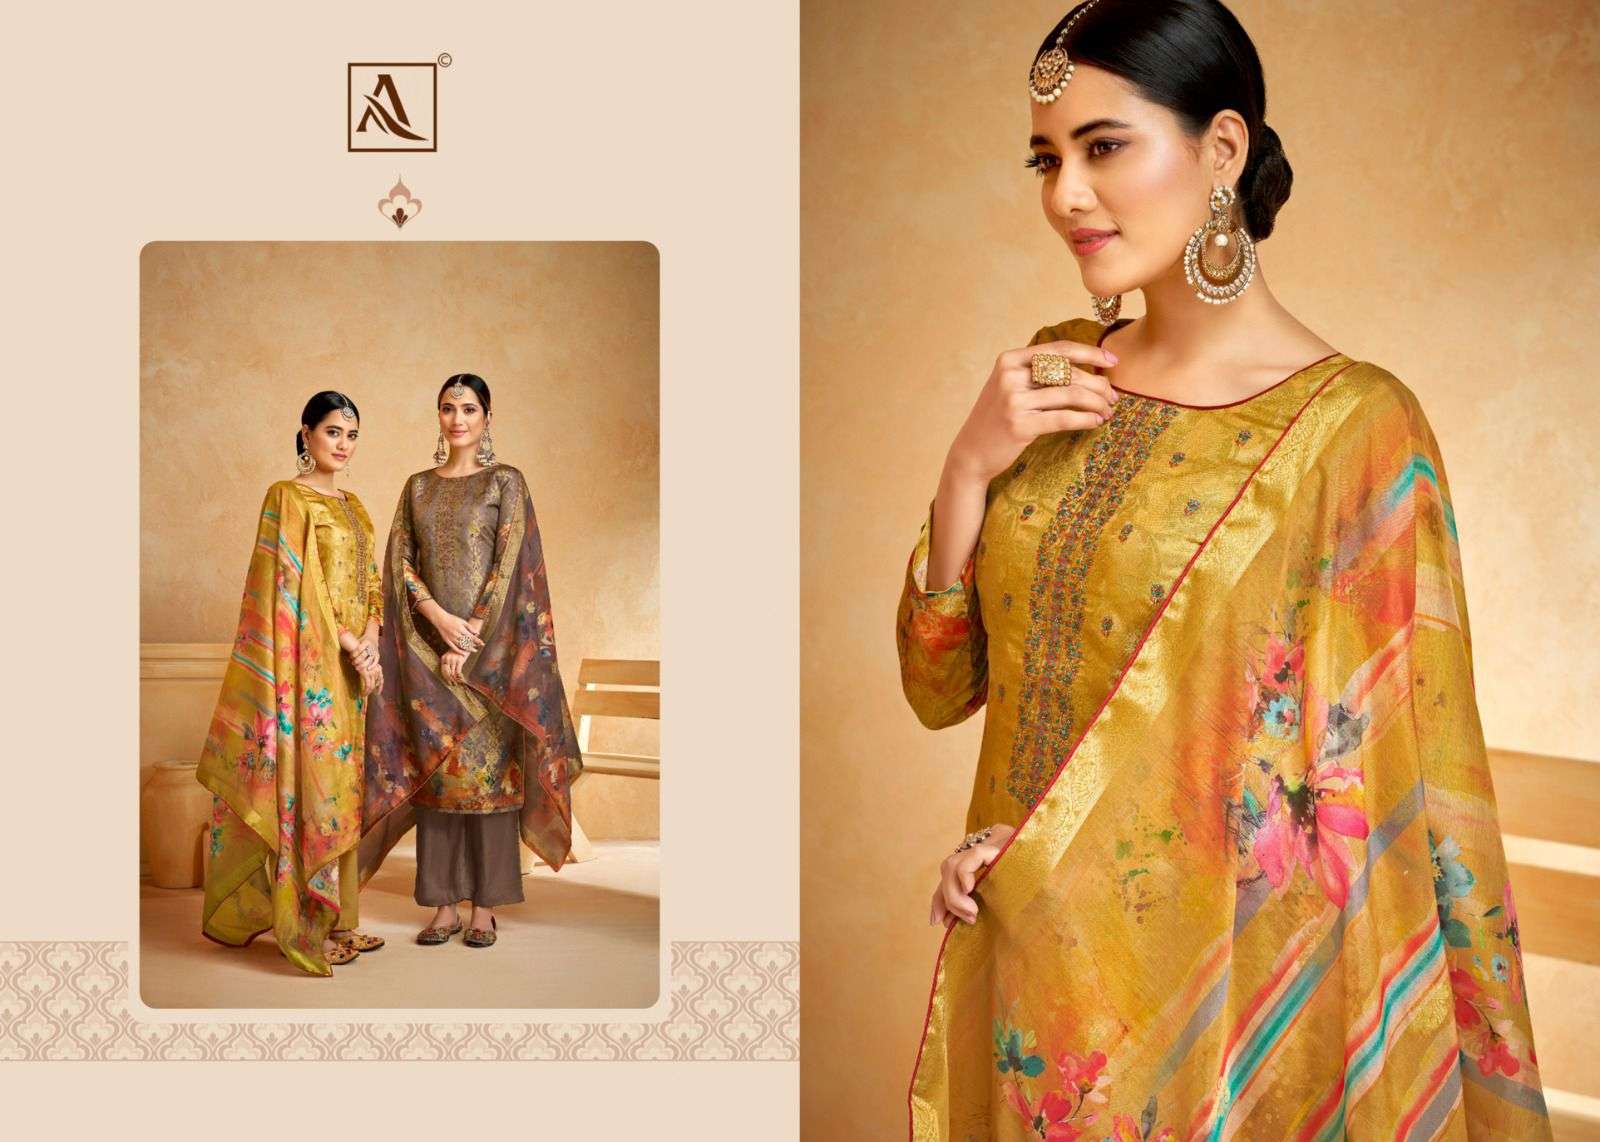 alok suit kalki embroidery exclusive designer salwar kameez catalogue online dealer surat